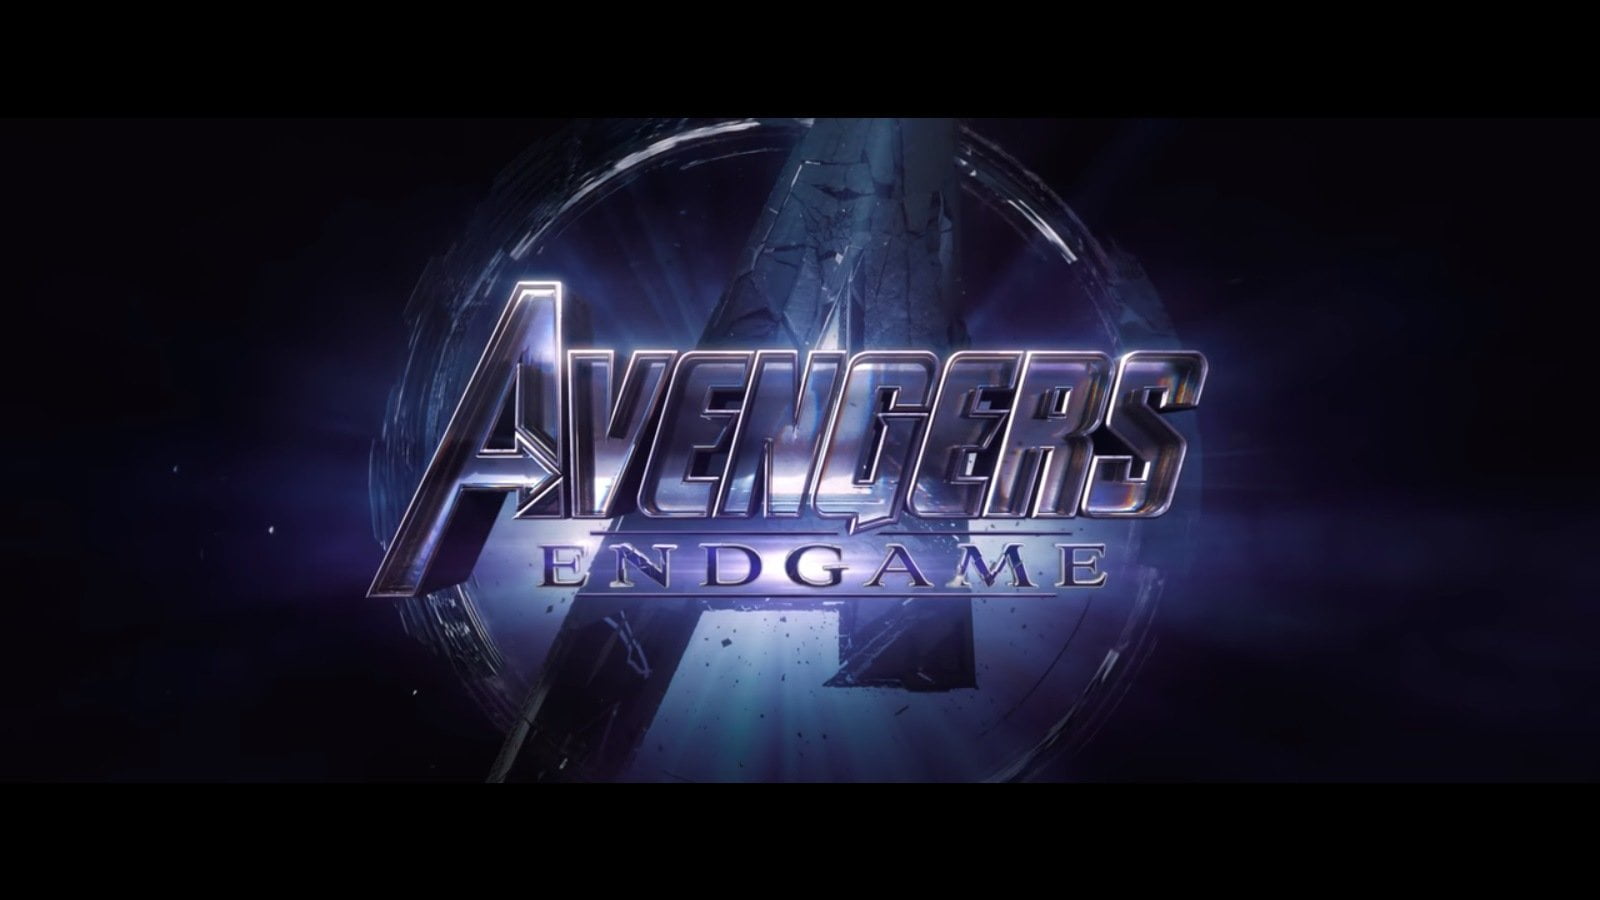 Avengers Endgame tráiler: Capitana Marvel junto a los Vengadores